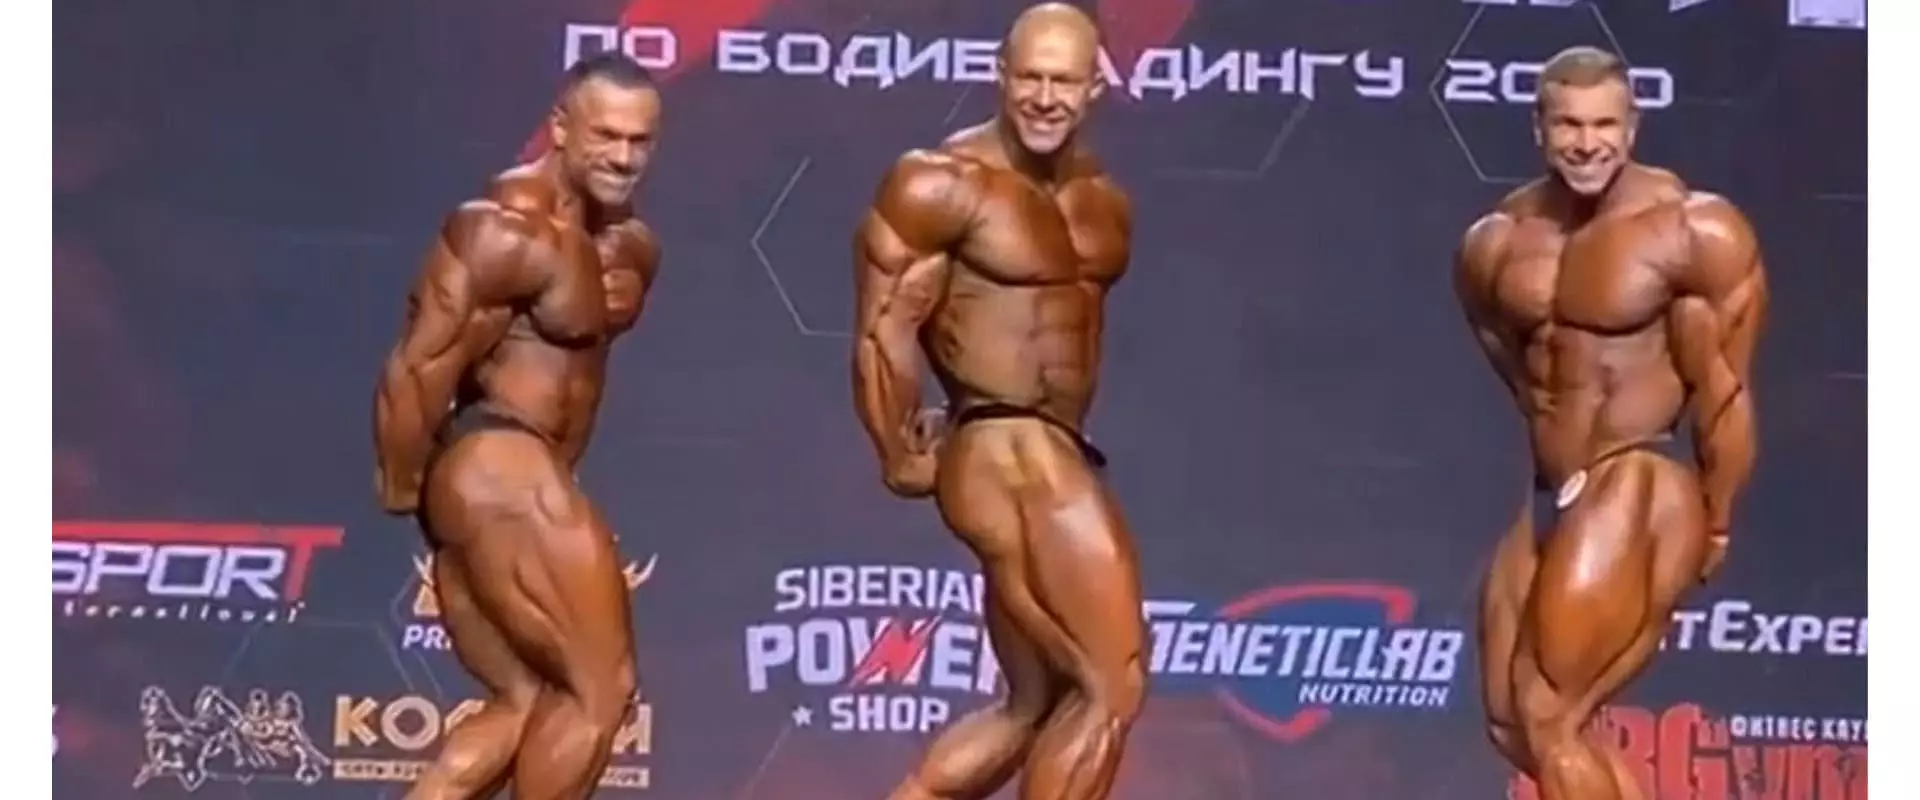 Bodybuilder Russes